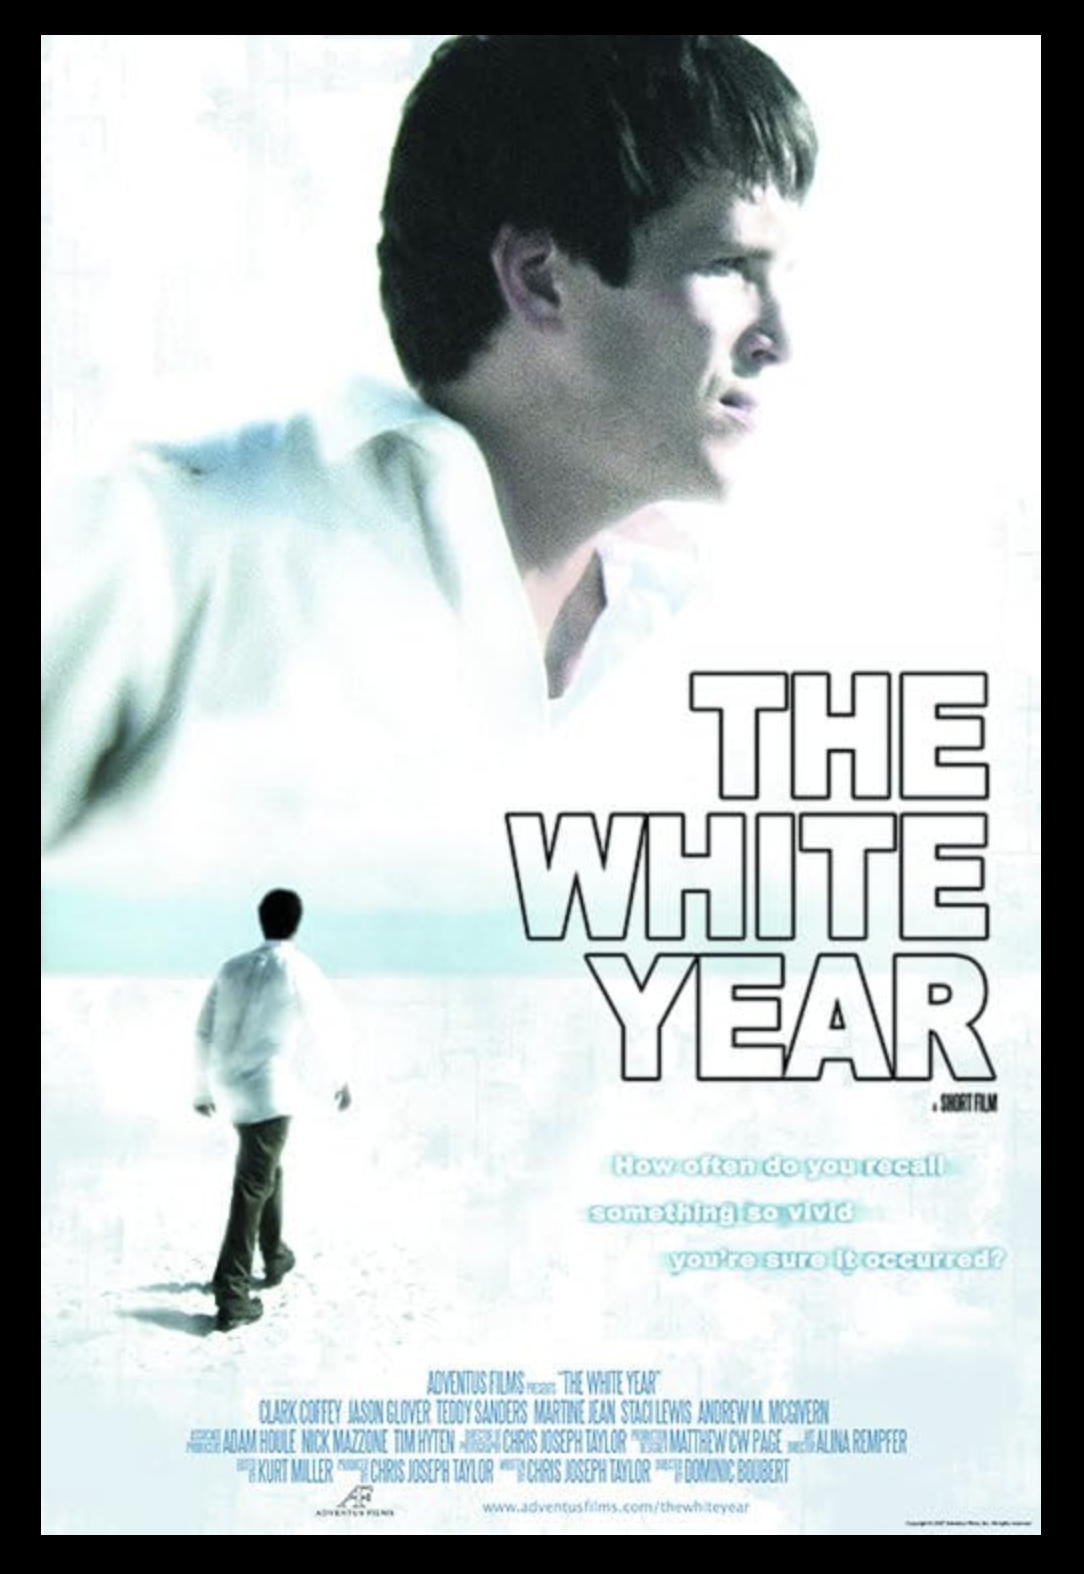 The White Year